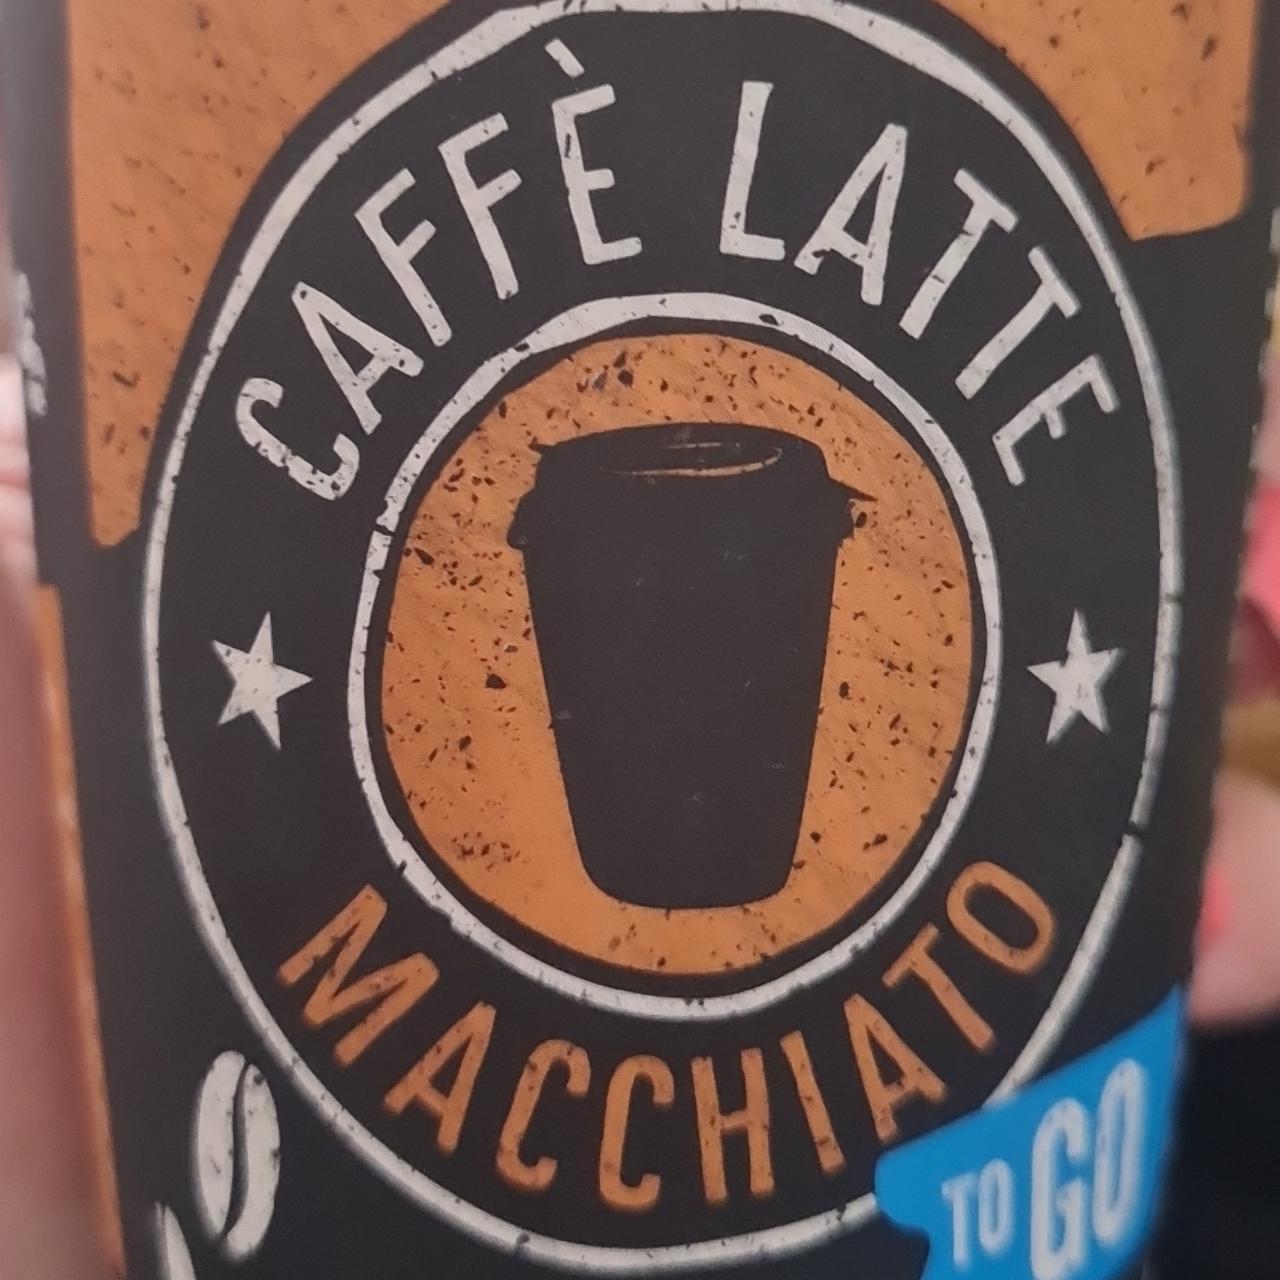 Fotografie - Caffé Latte Macchiato To Go Penny ready